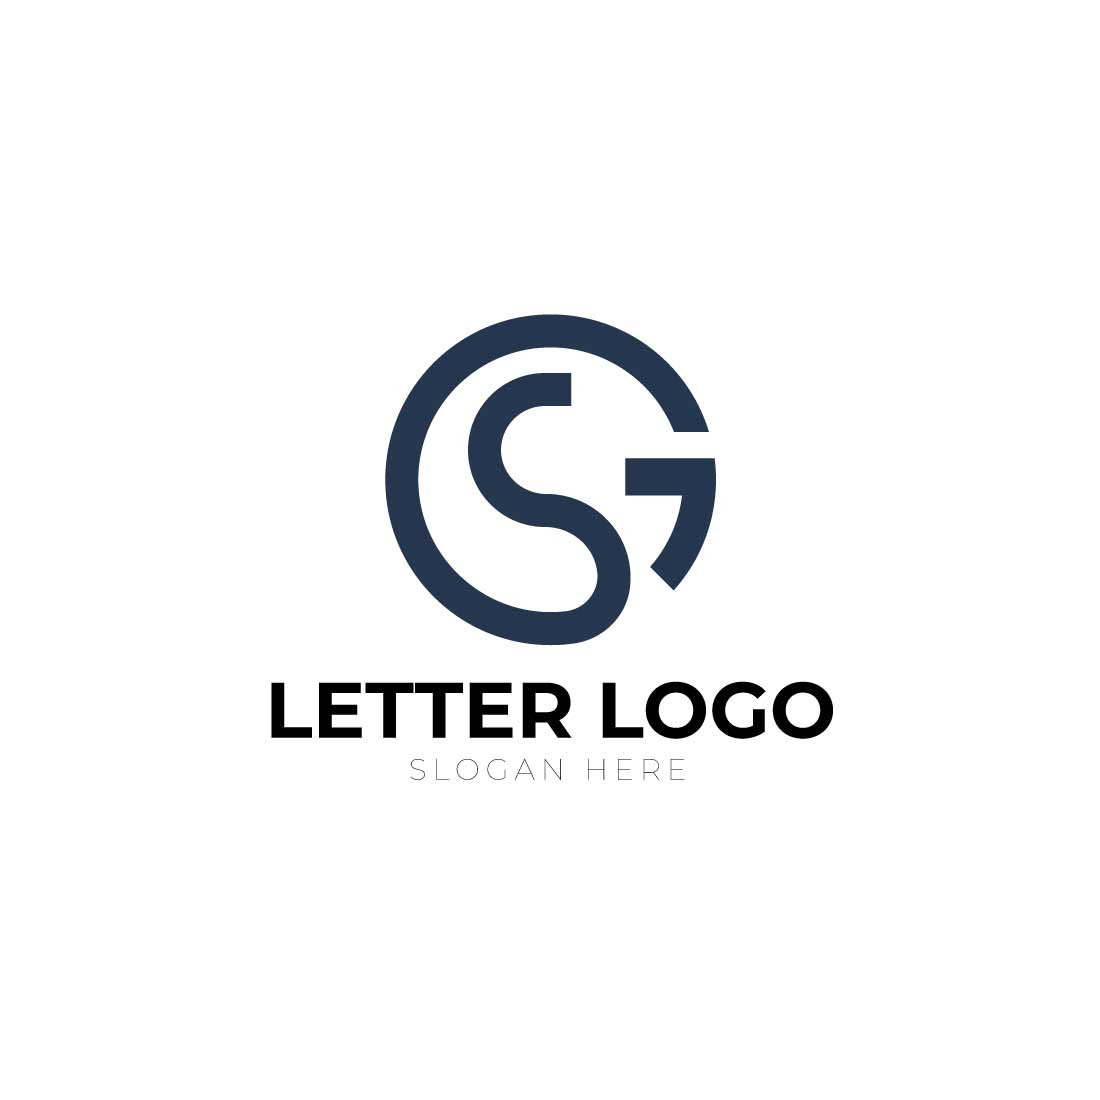 Abstract letter JK logo design preview image.